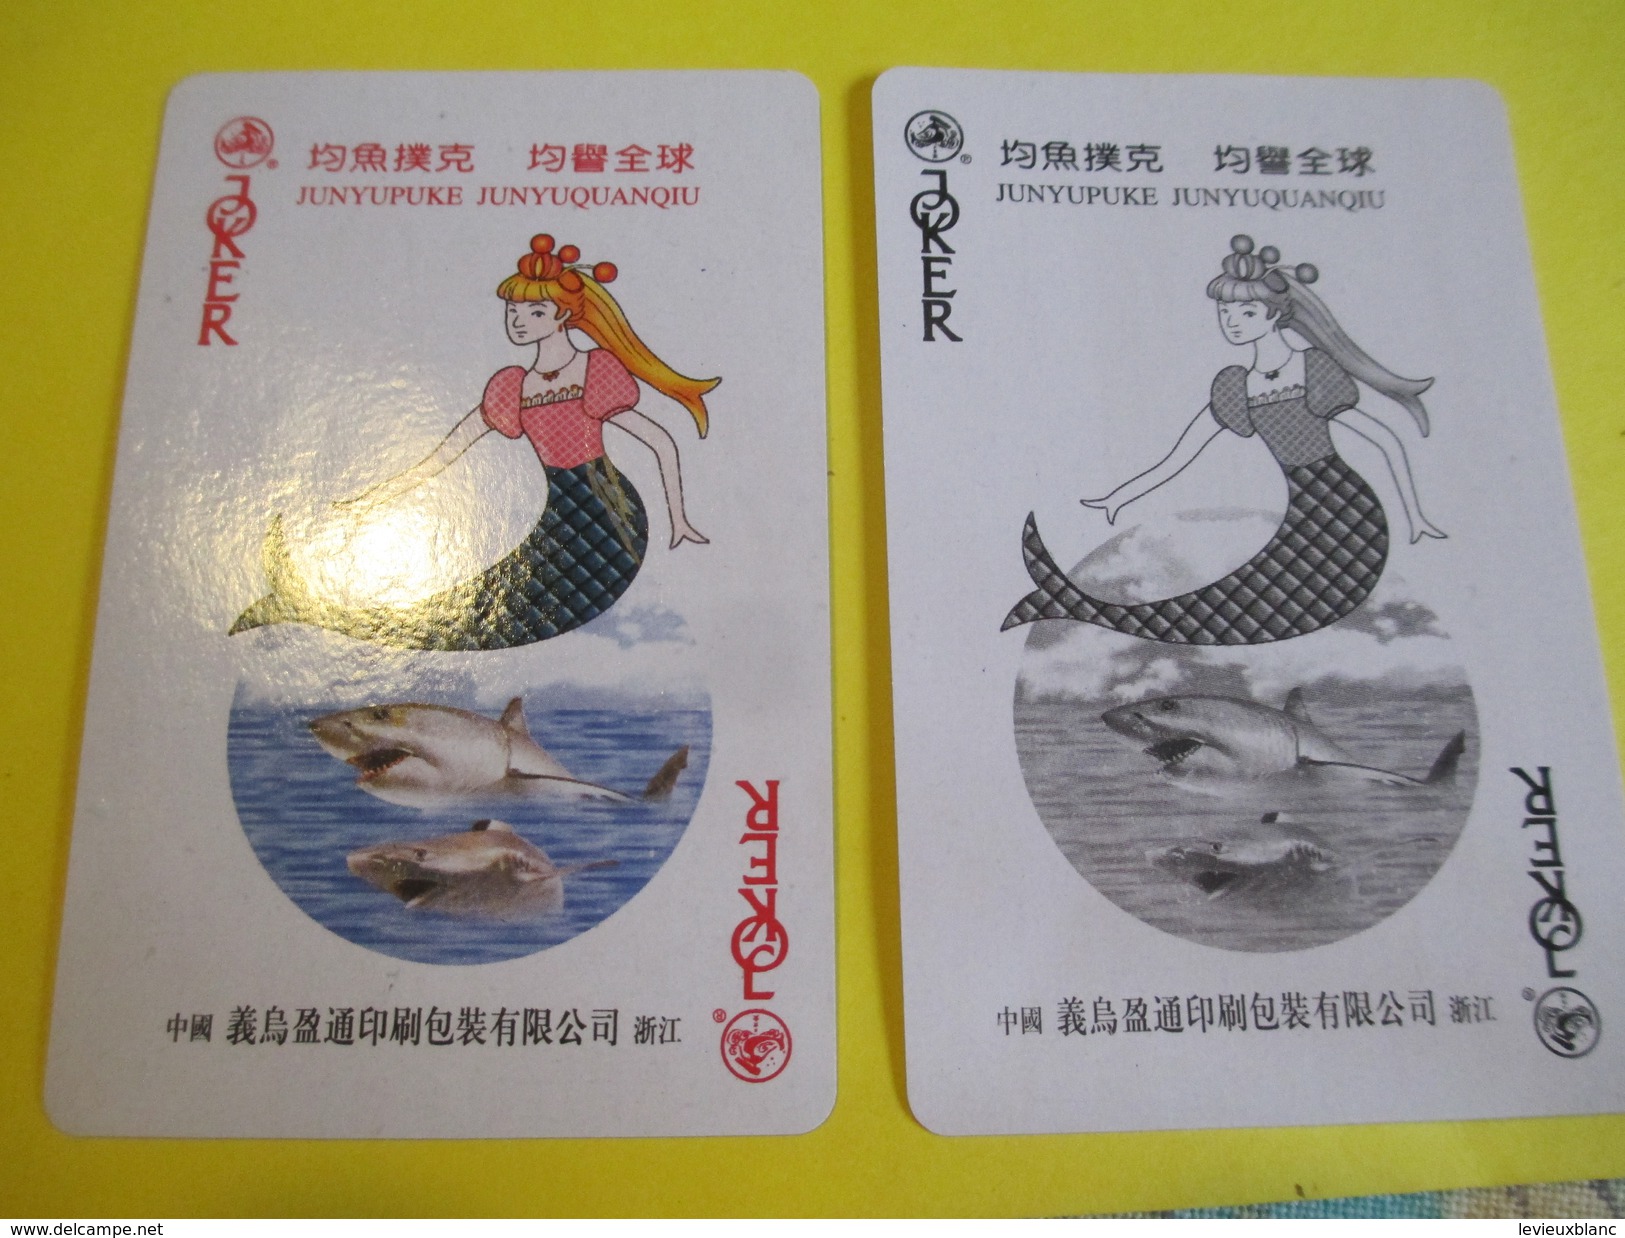 Jeux de 54 cartes /Publicitaire/Cartes glacées/ IBIS Accor Hotels / Made in CHINA/vers 2000        CAJ22